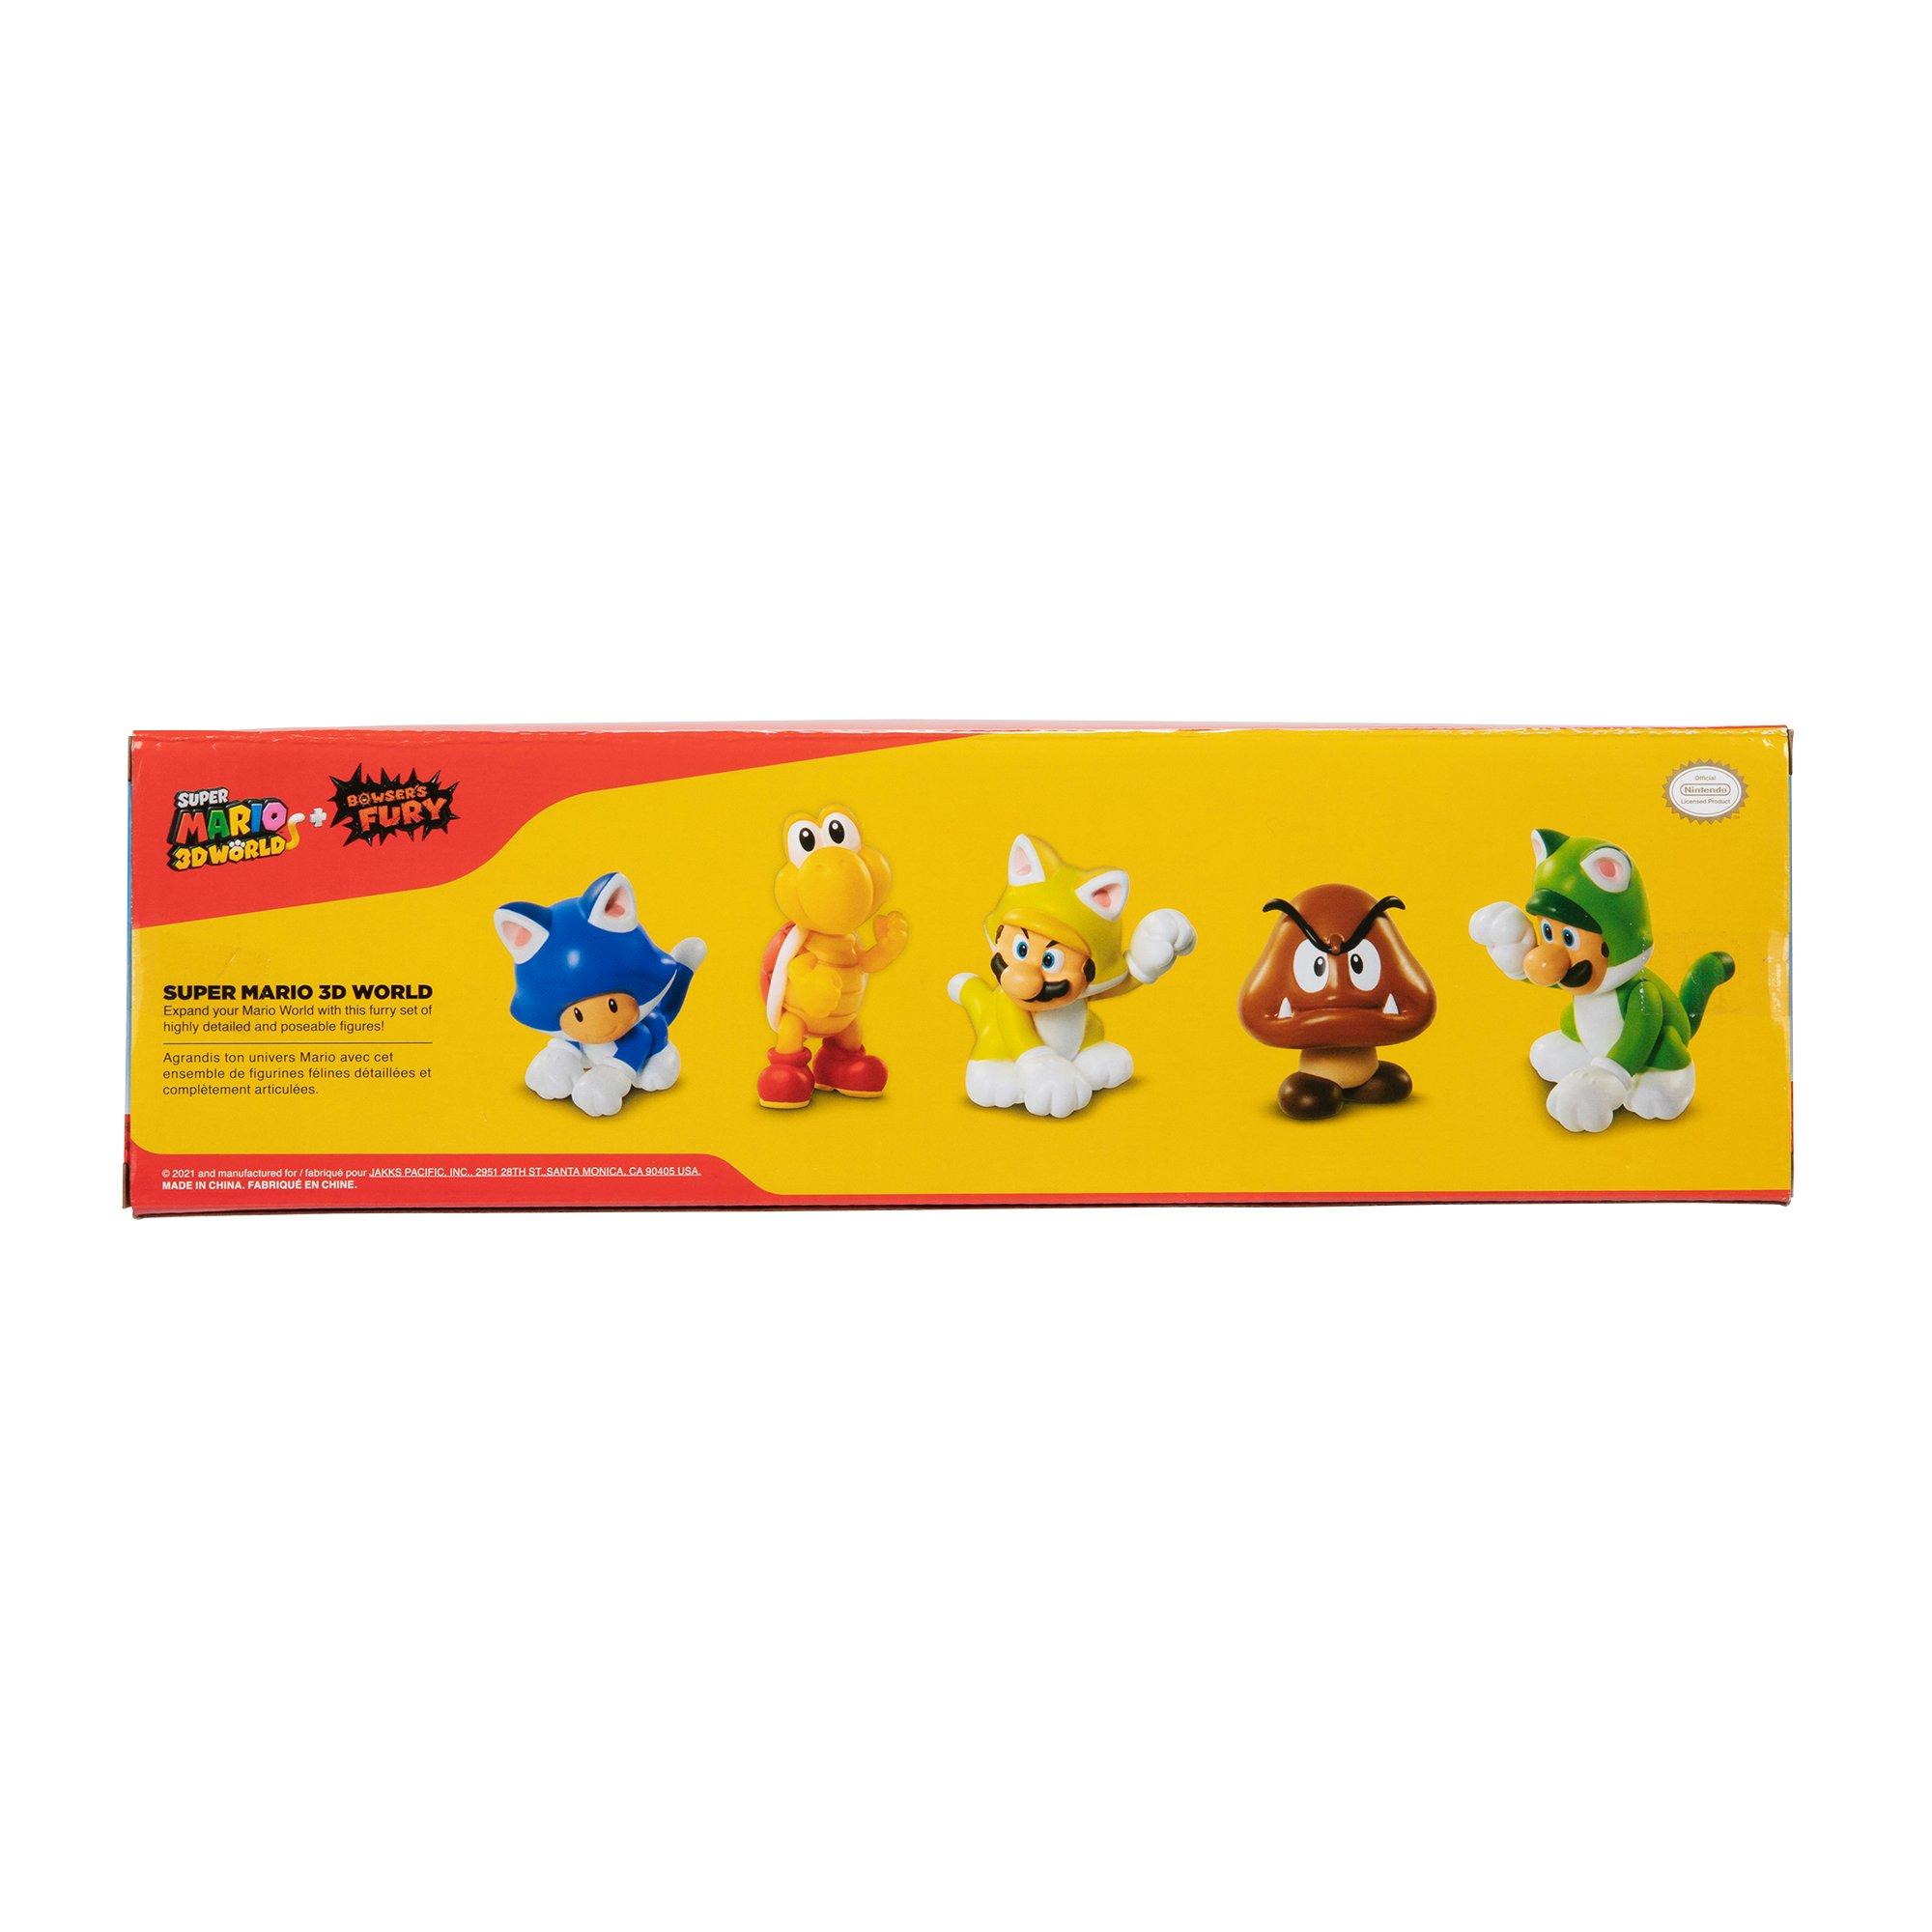 Cat Mario Super Mario 2 inch Nintendo New Toy 2022 Jakks 3+ ~ Free Shipping